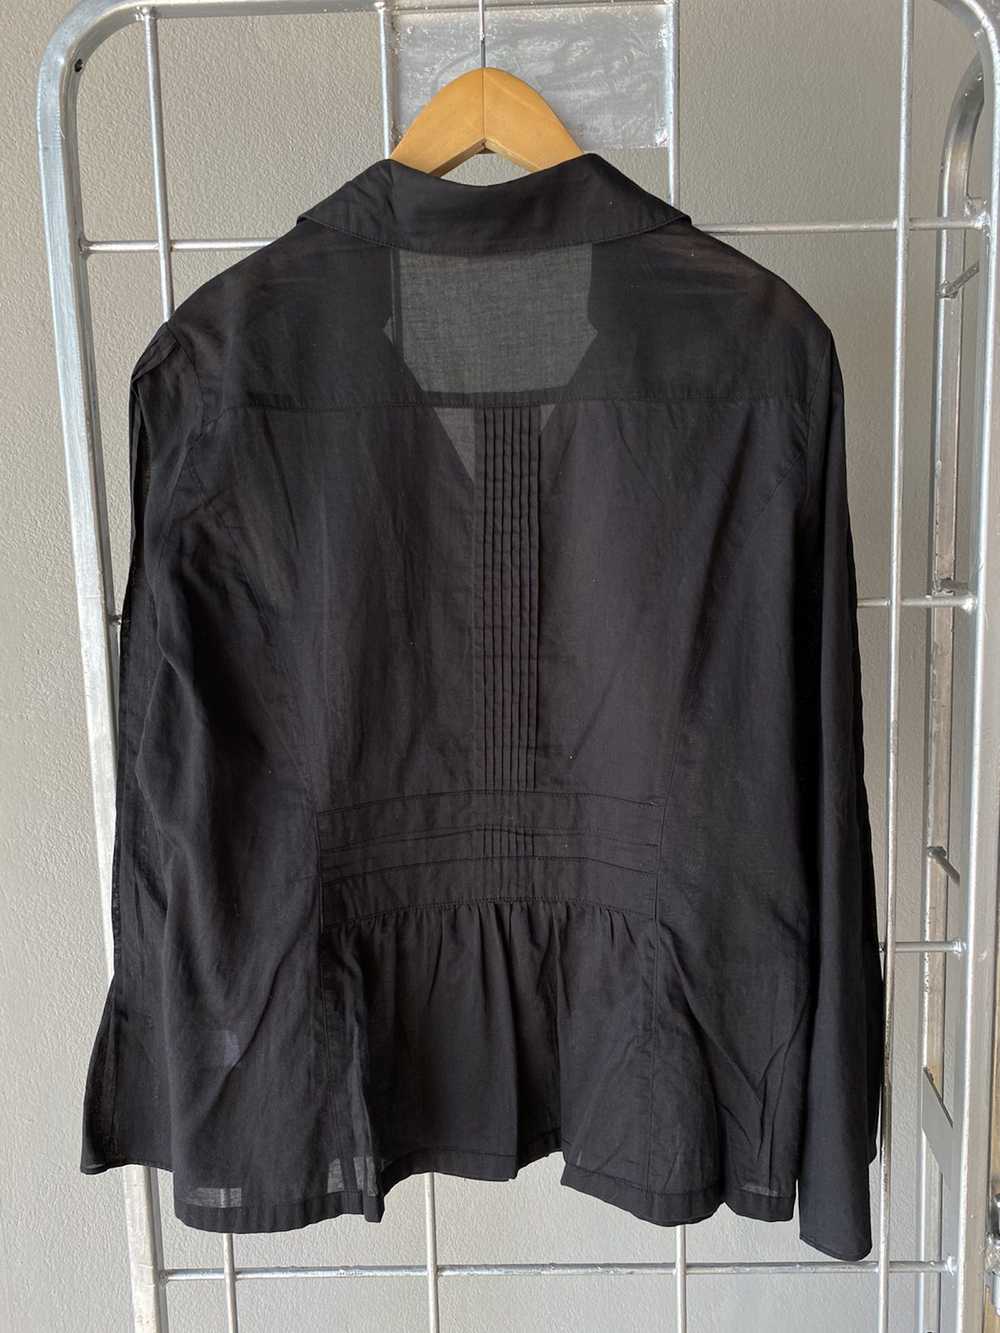 Kansai Yamamoto Kansai Yamamoto Bis black blouse - image 6